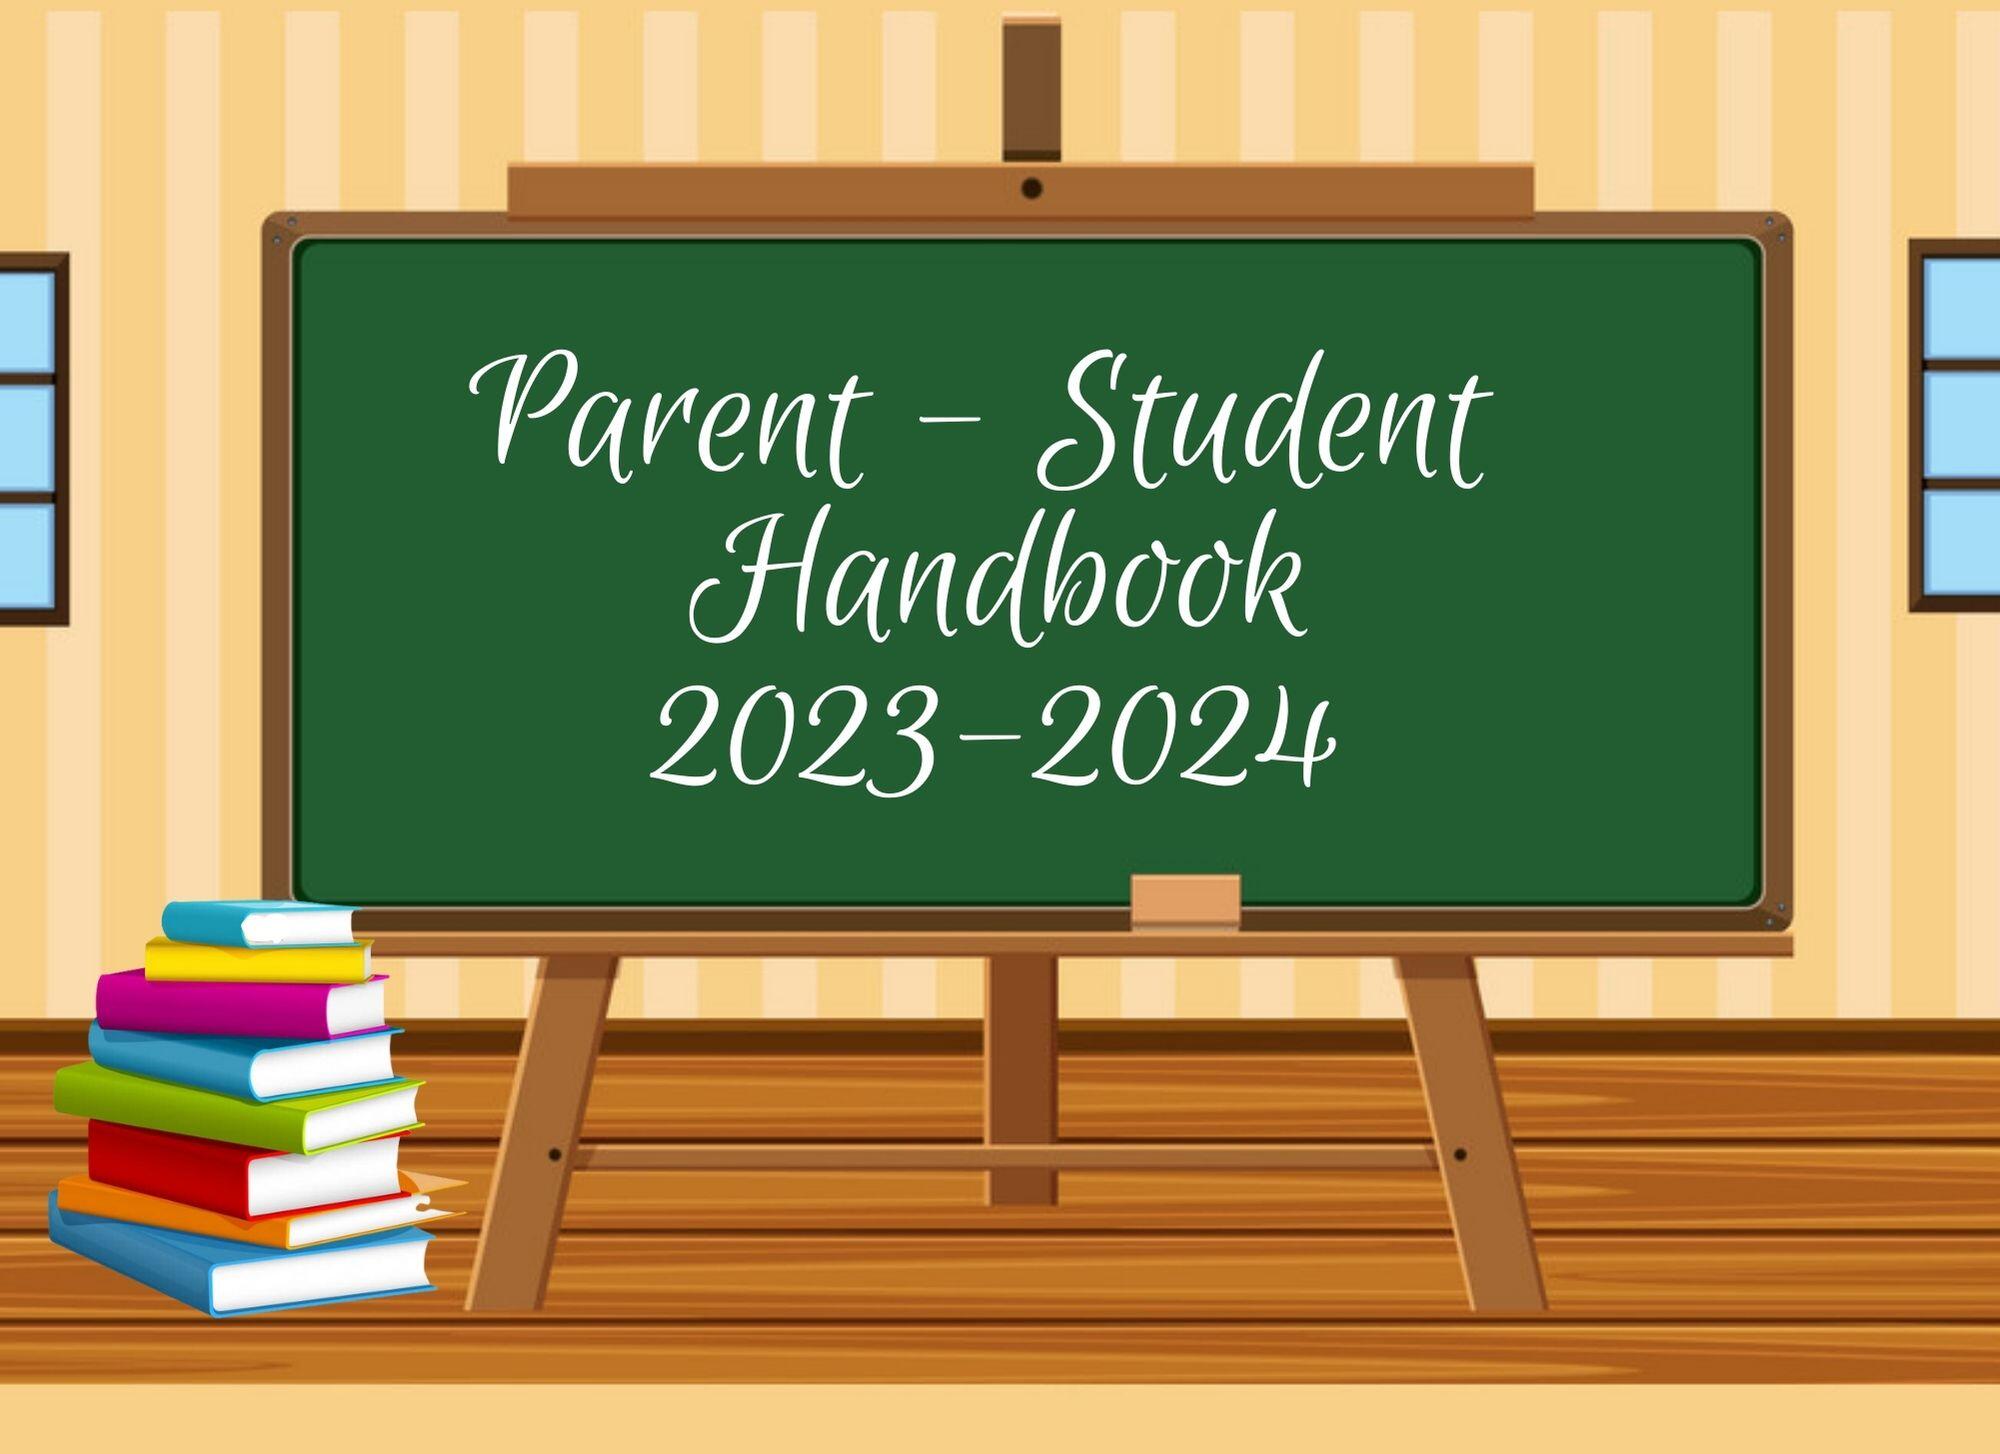 Student/parent handbook